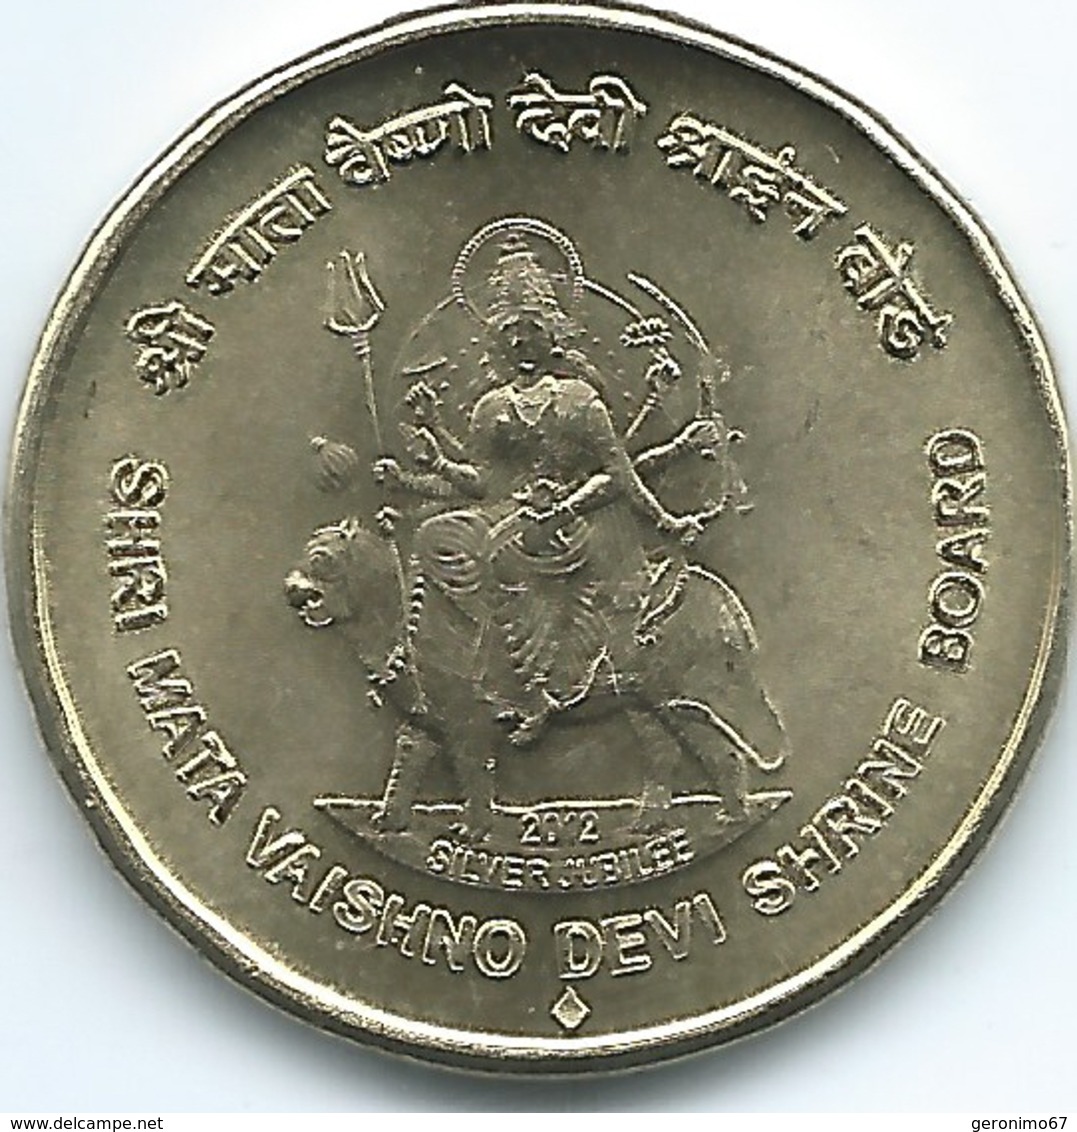 India - 5 Rupees - 2012 - Silver Jubilee Shri Mata Vaishno Devi Shrine Board - KM429 - India